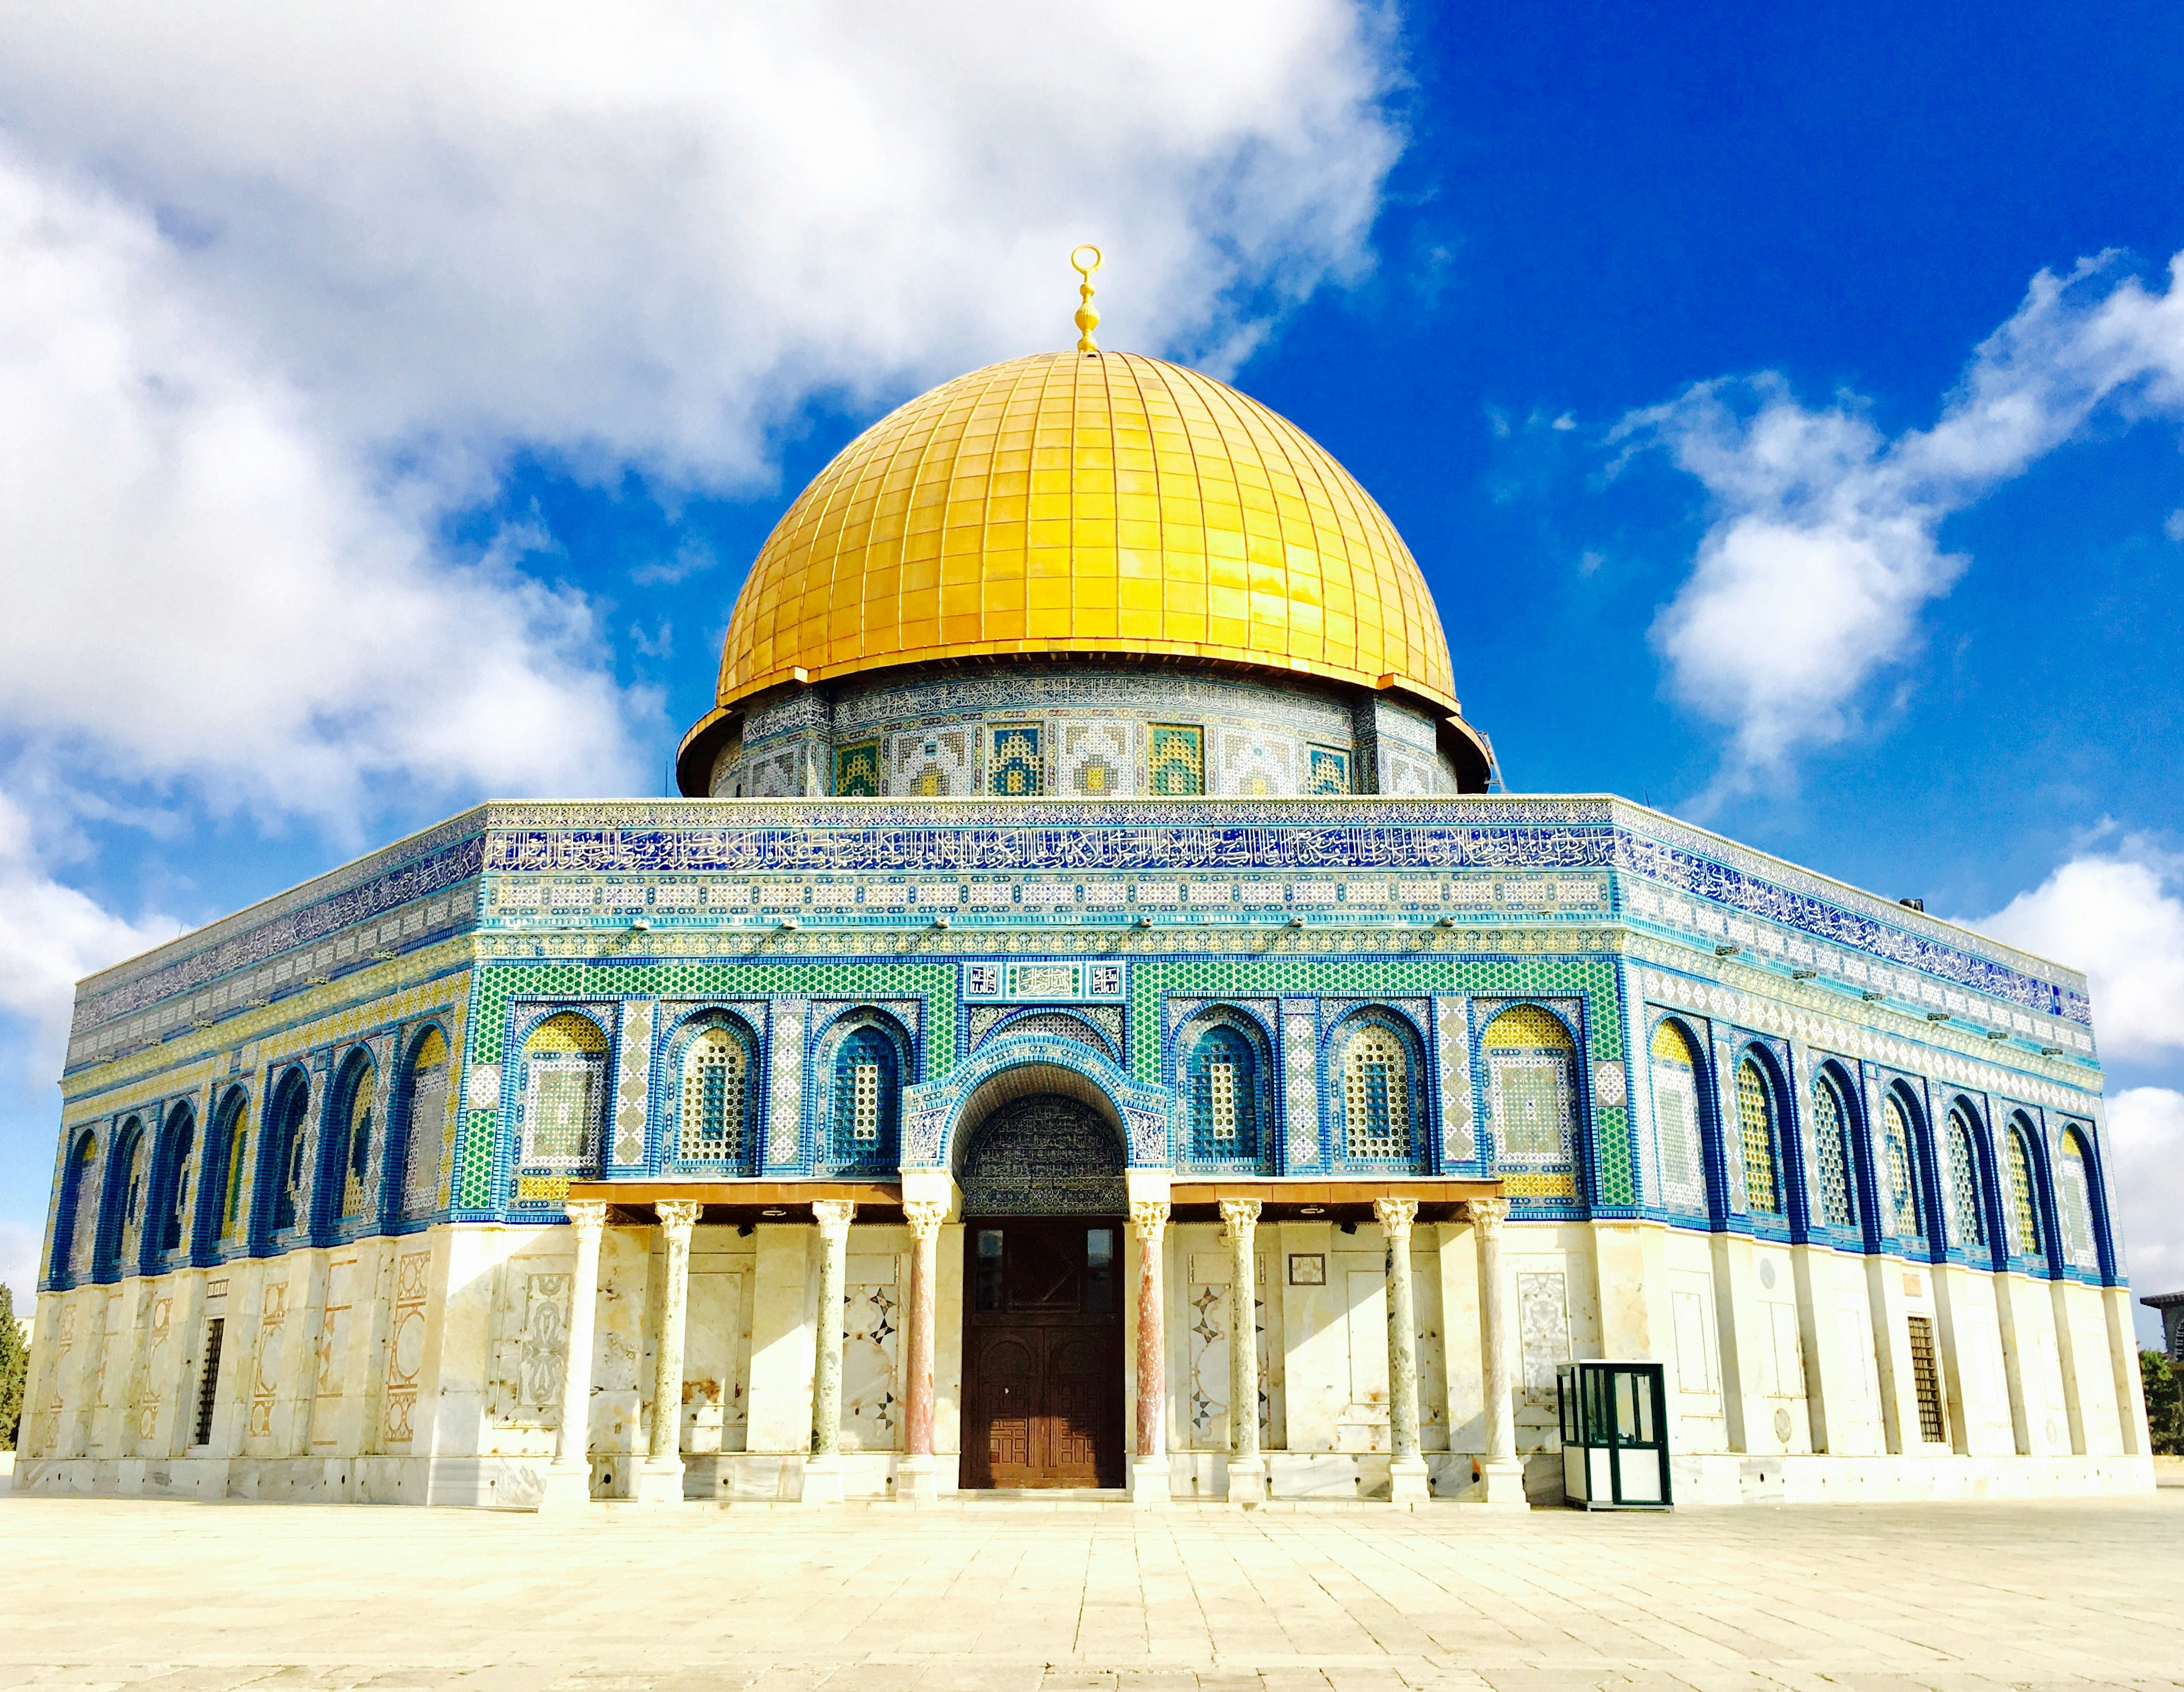 550 Al Aqsa Mosque Pictures Download Free Images On Unsplash